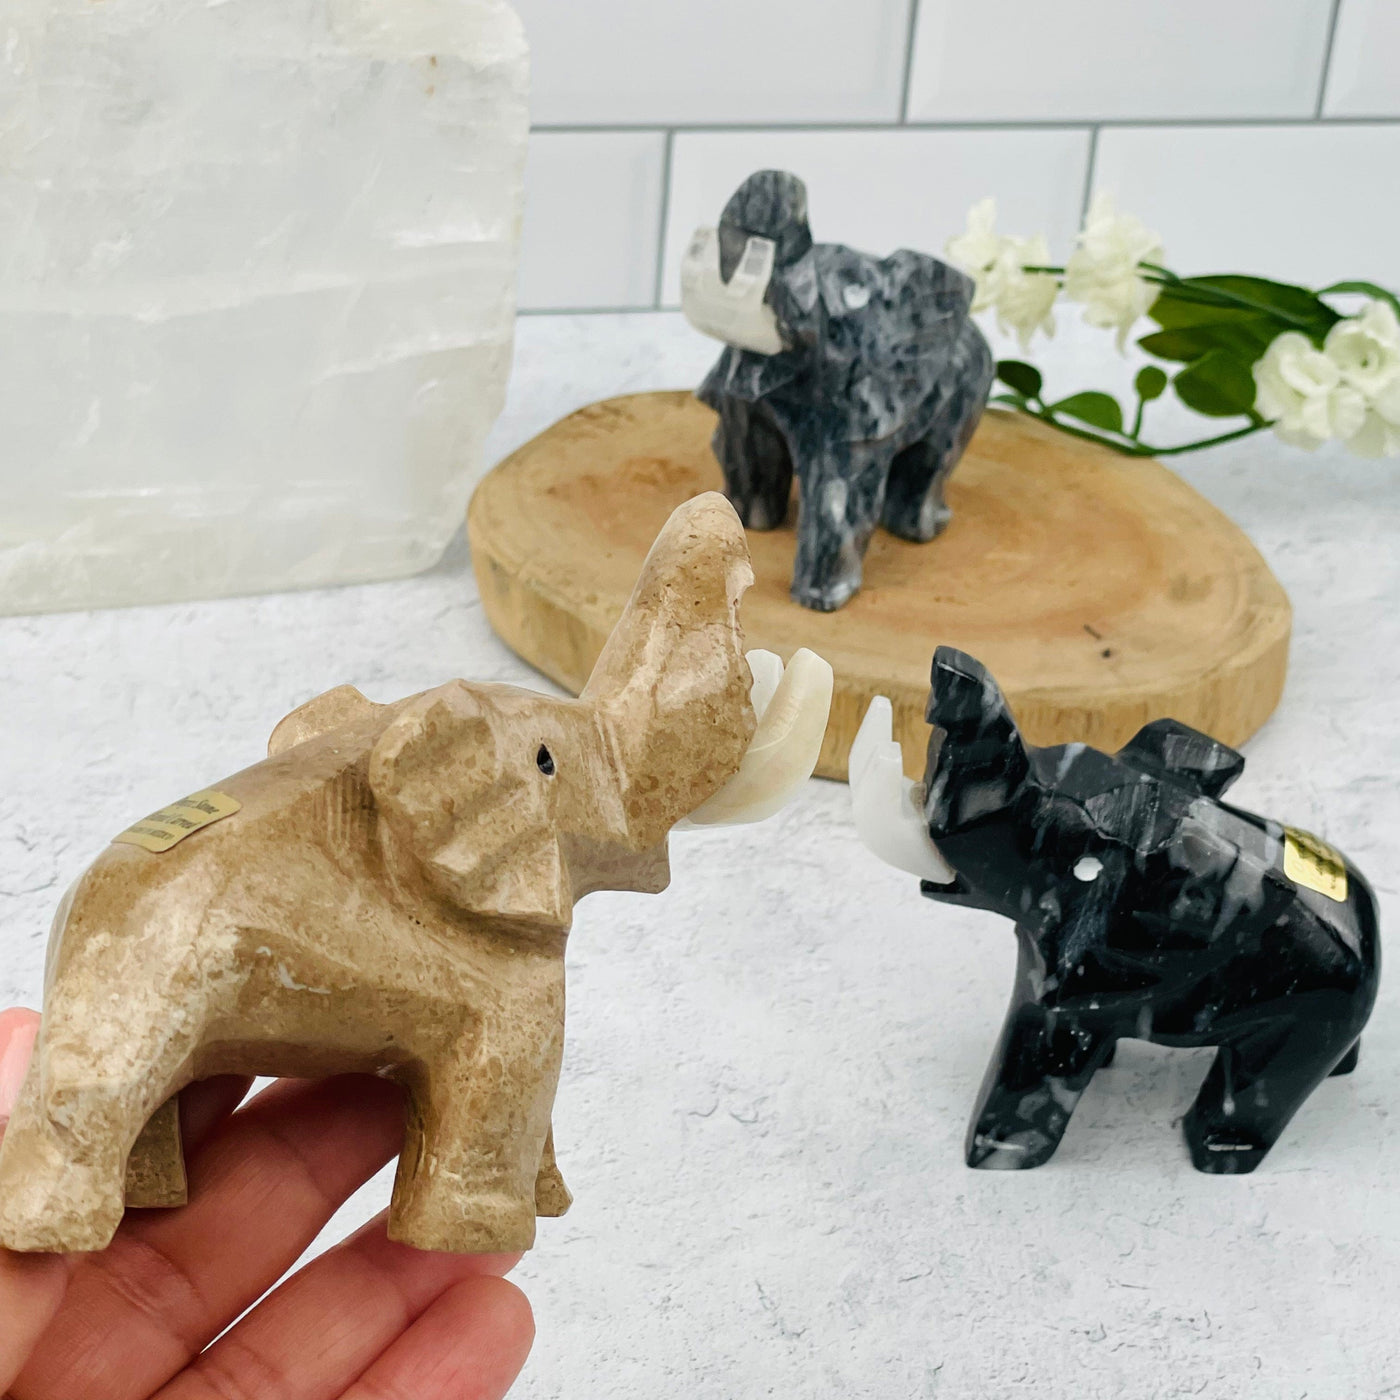 Elephant Carved Onyx Figurine Statues - YOU CHOOSE COLOR